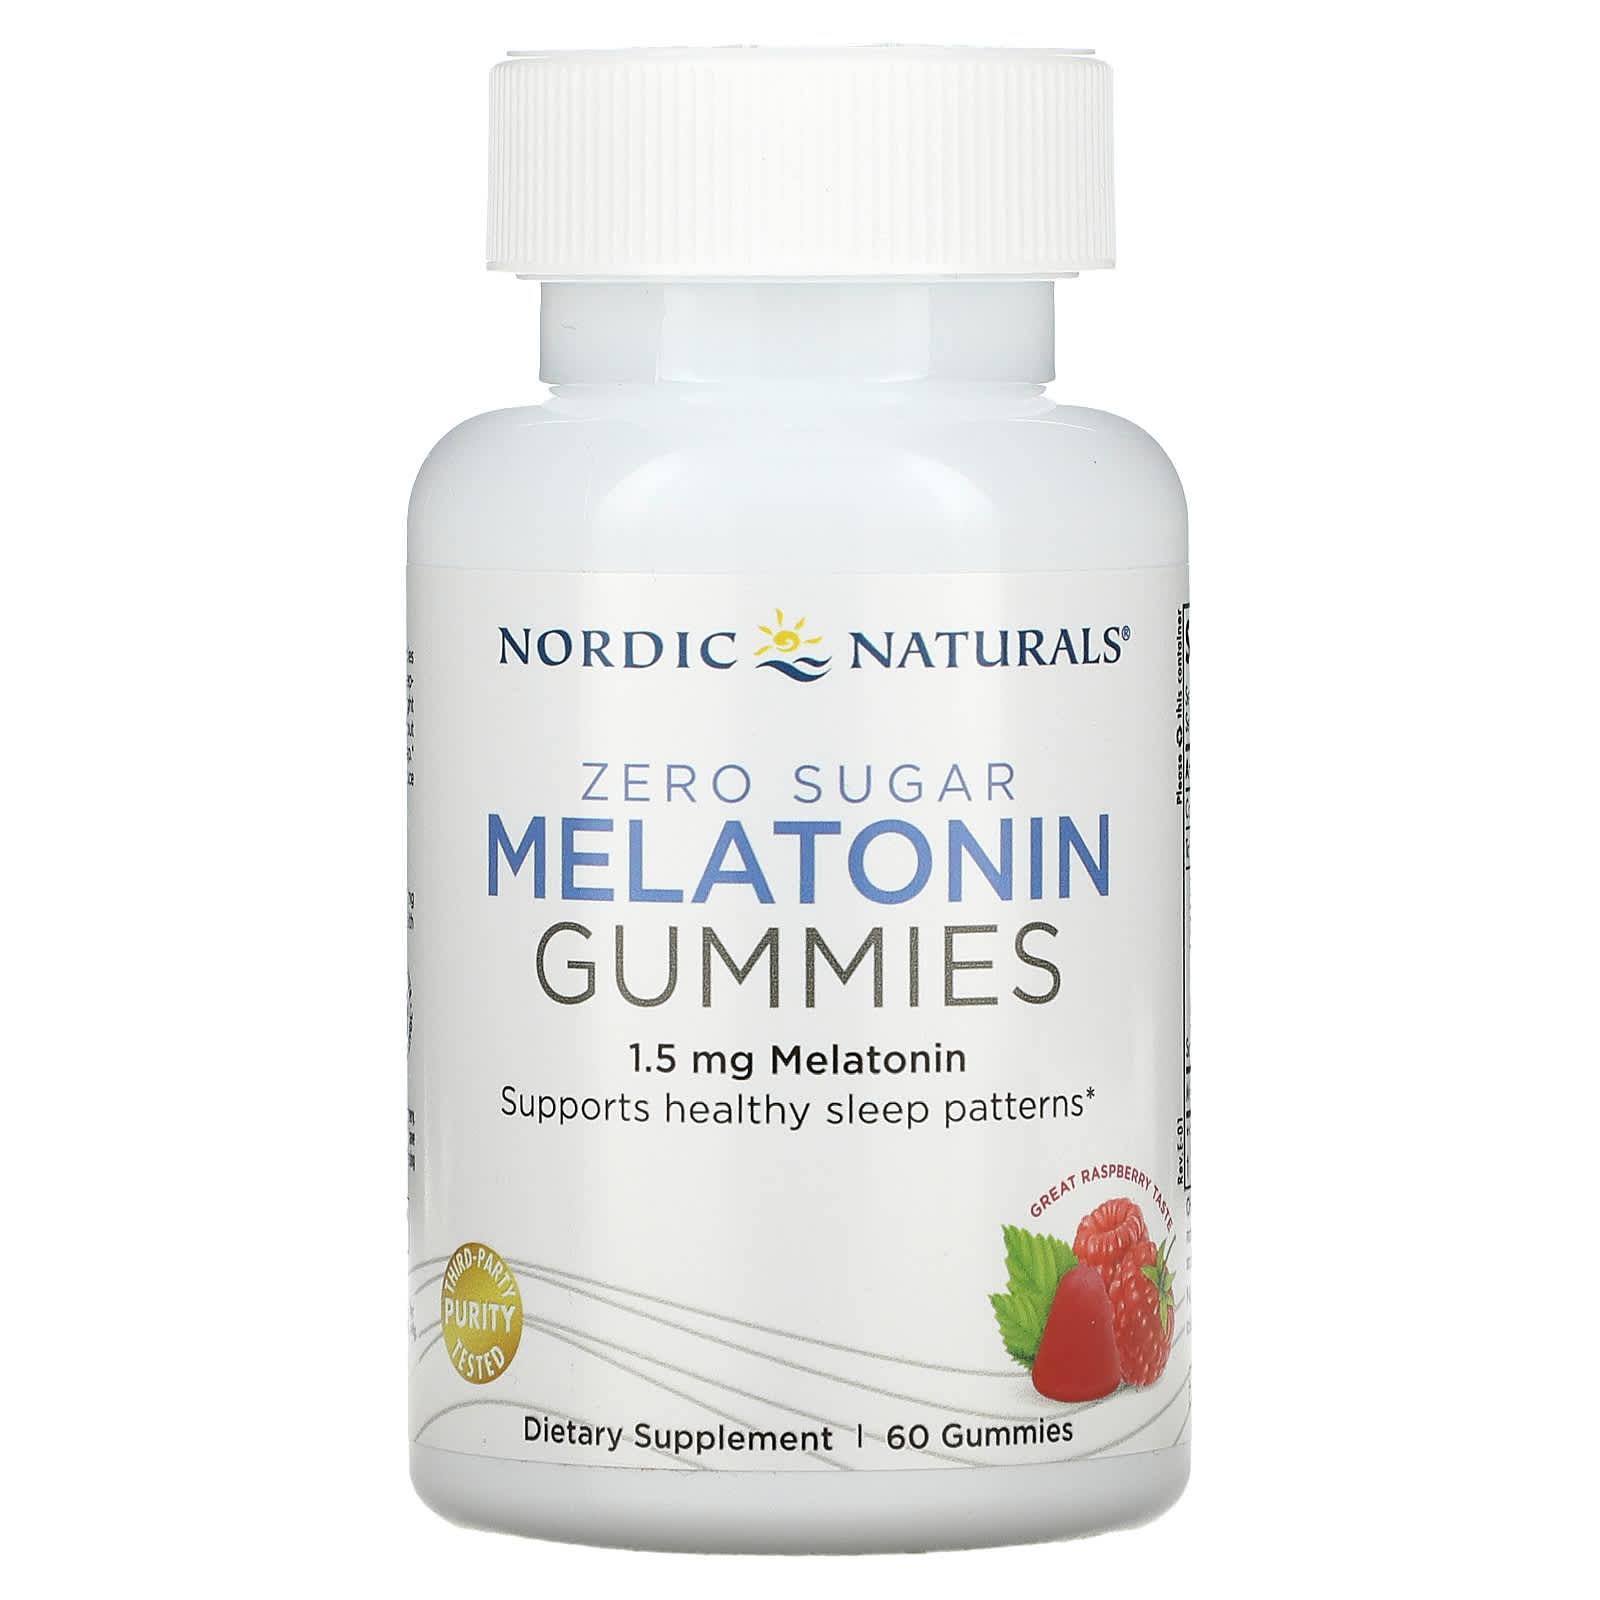 can cats eat melatonin gummies